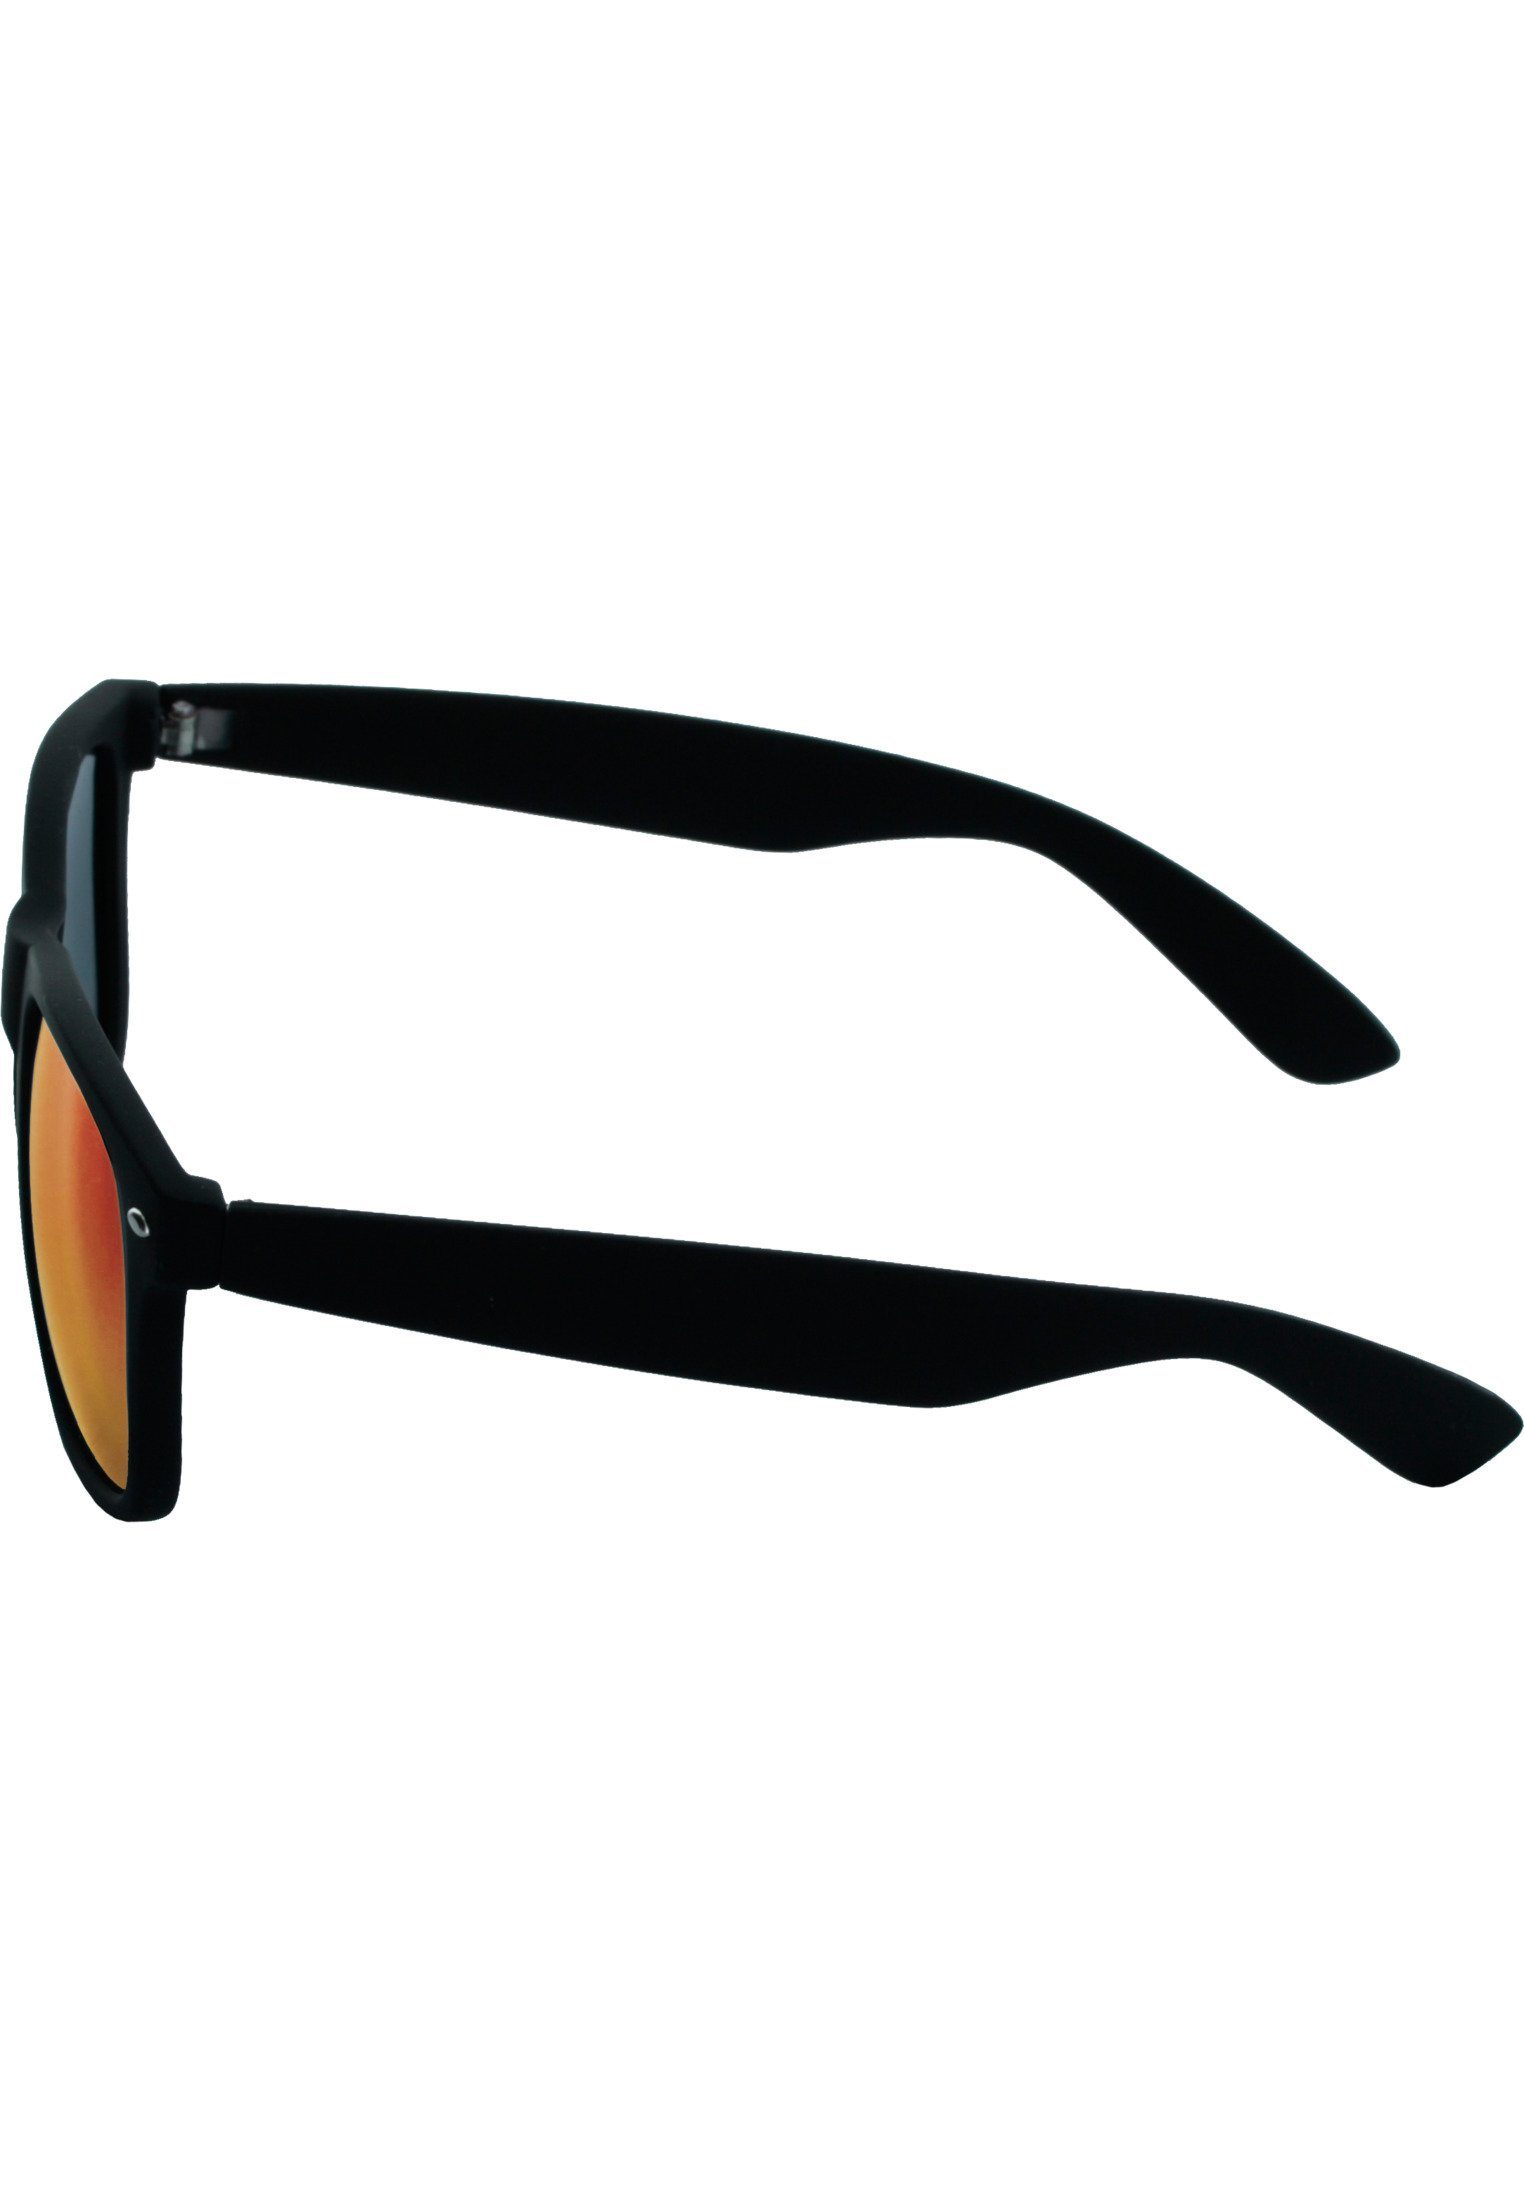 Likoma MSTRDS Sonnenbrille Mirror blk/orange Sunglasses Accessoires